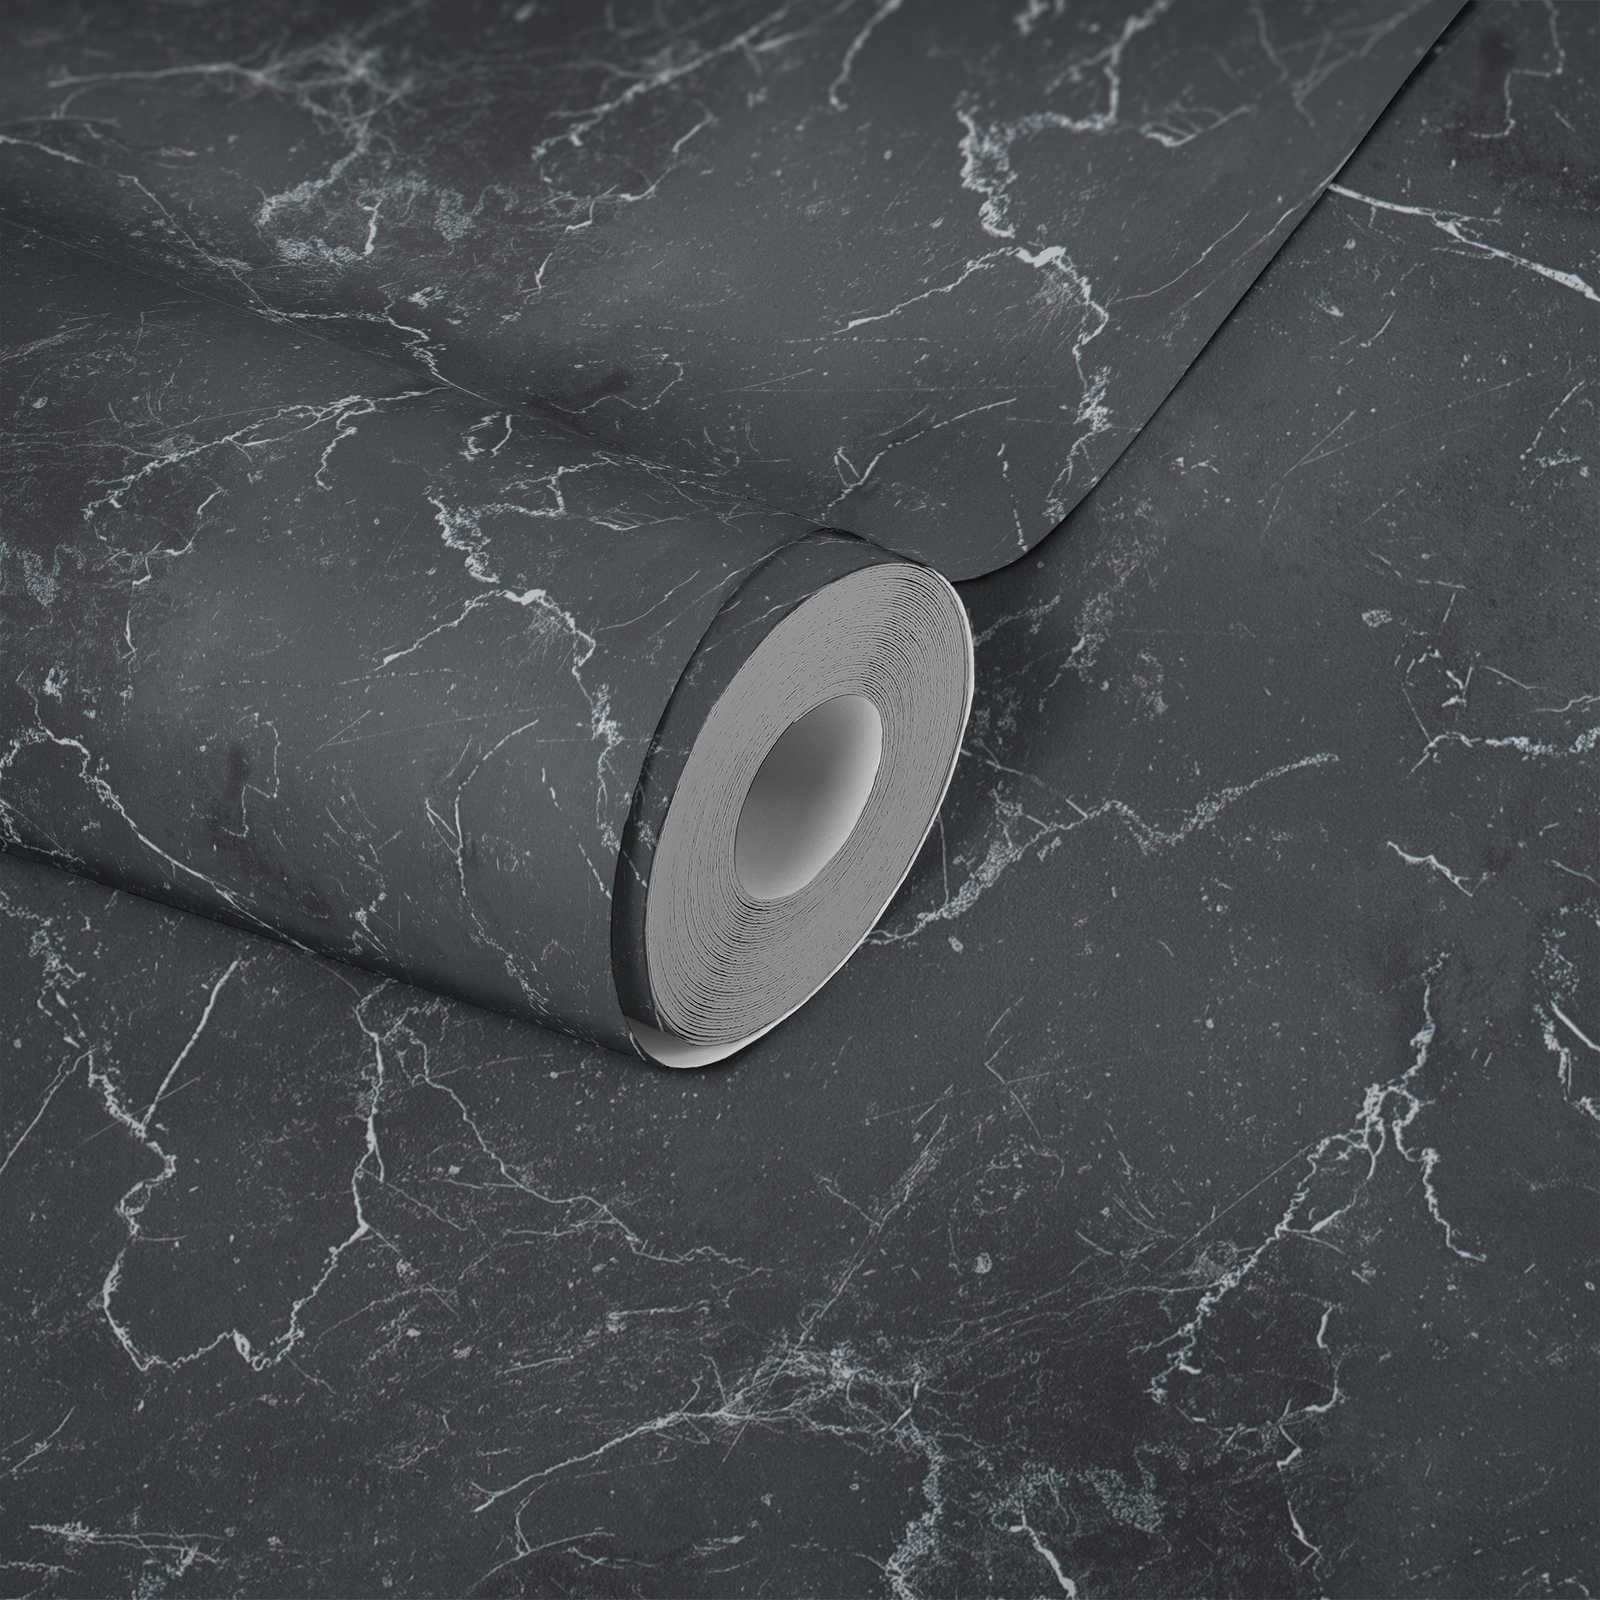             Non-woven wallpaper marble look dark grey, Design by MICHALSKY
        